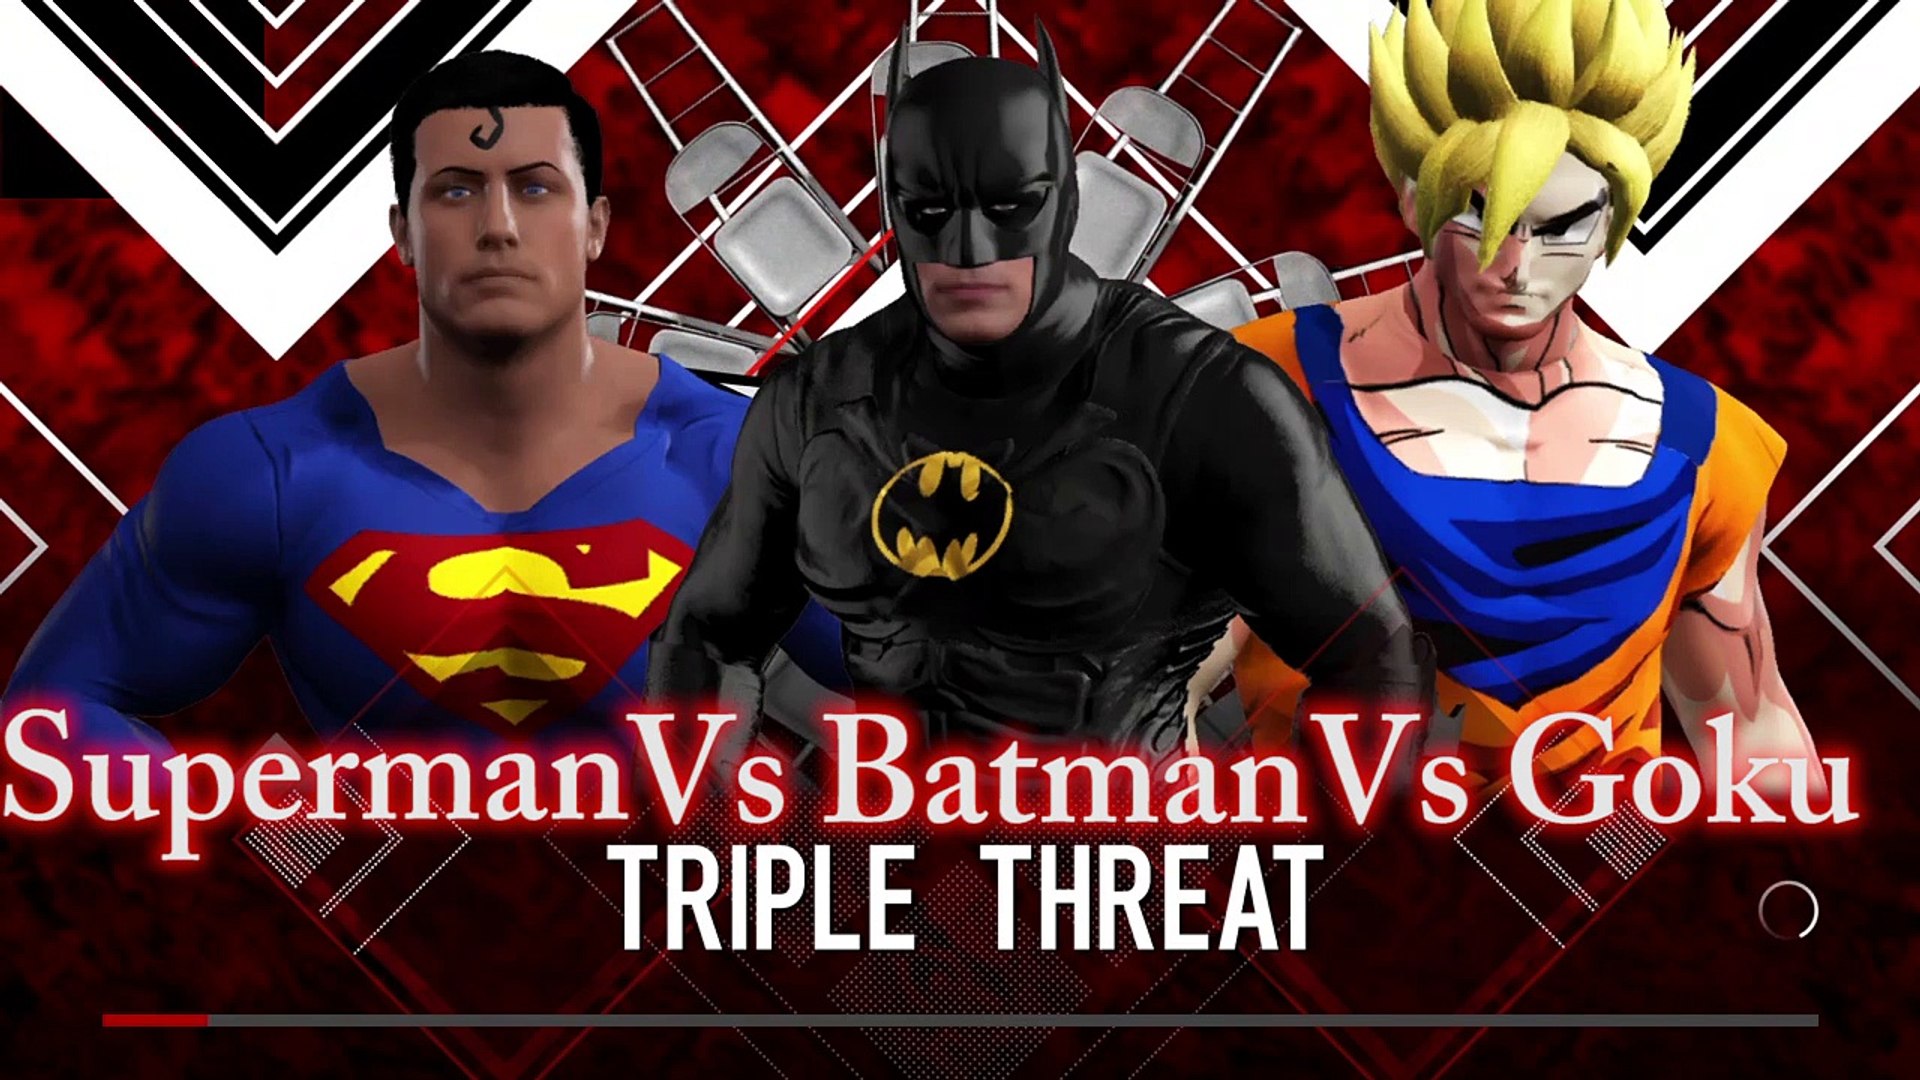 Goku vs Batman vs Superman Full Fight - video Dailymotion